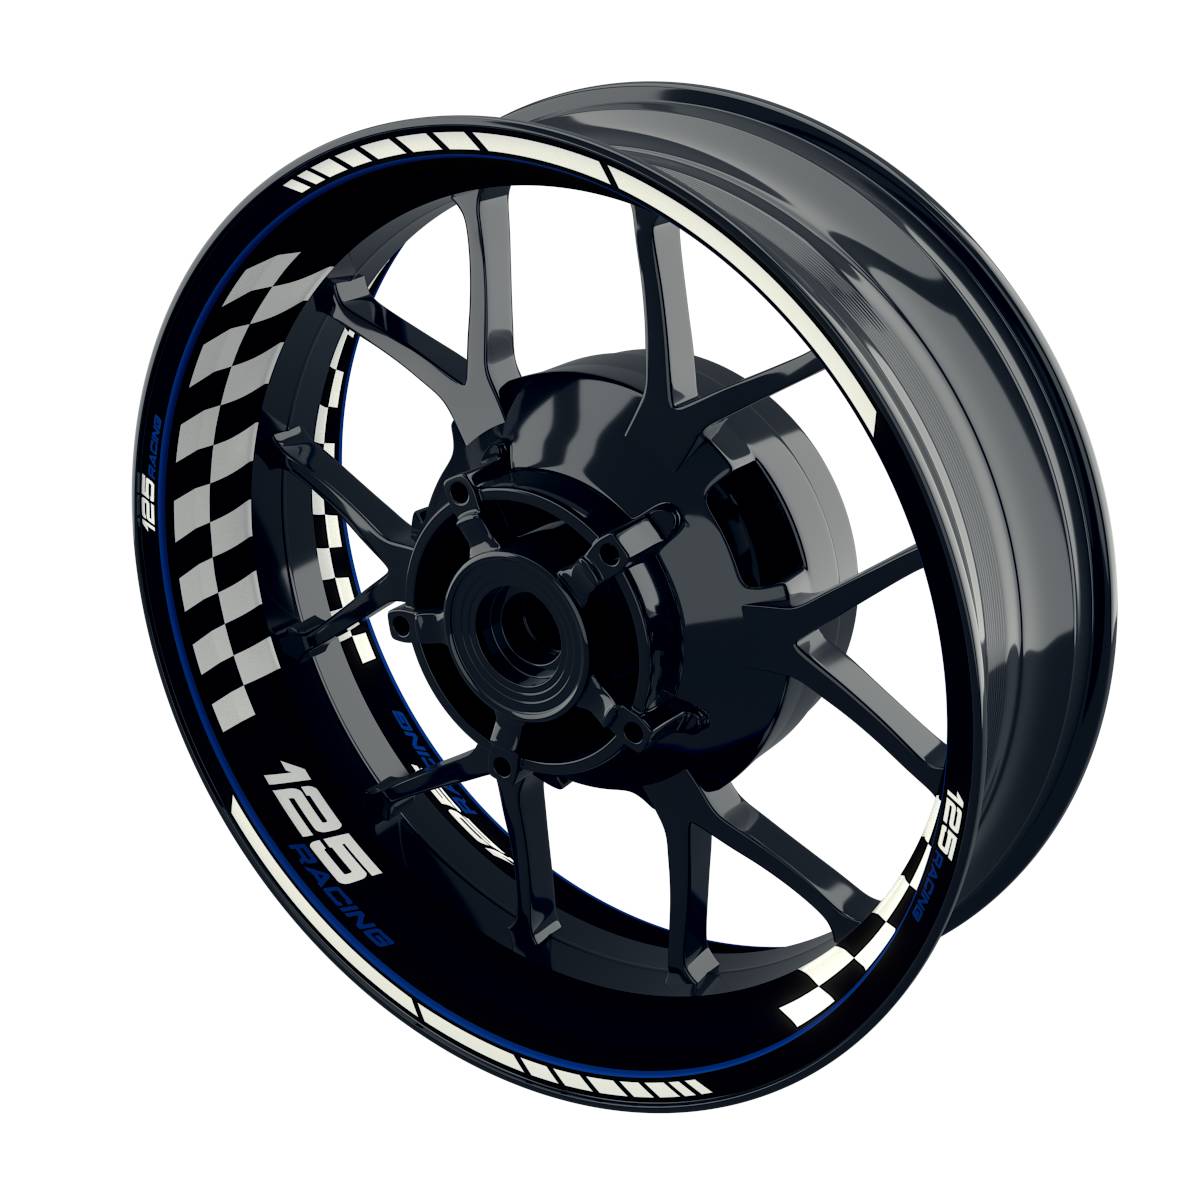 125 Racing Rim Decals Grid Wheelsticker Premium